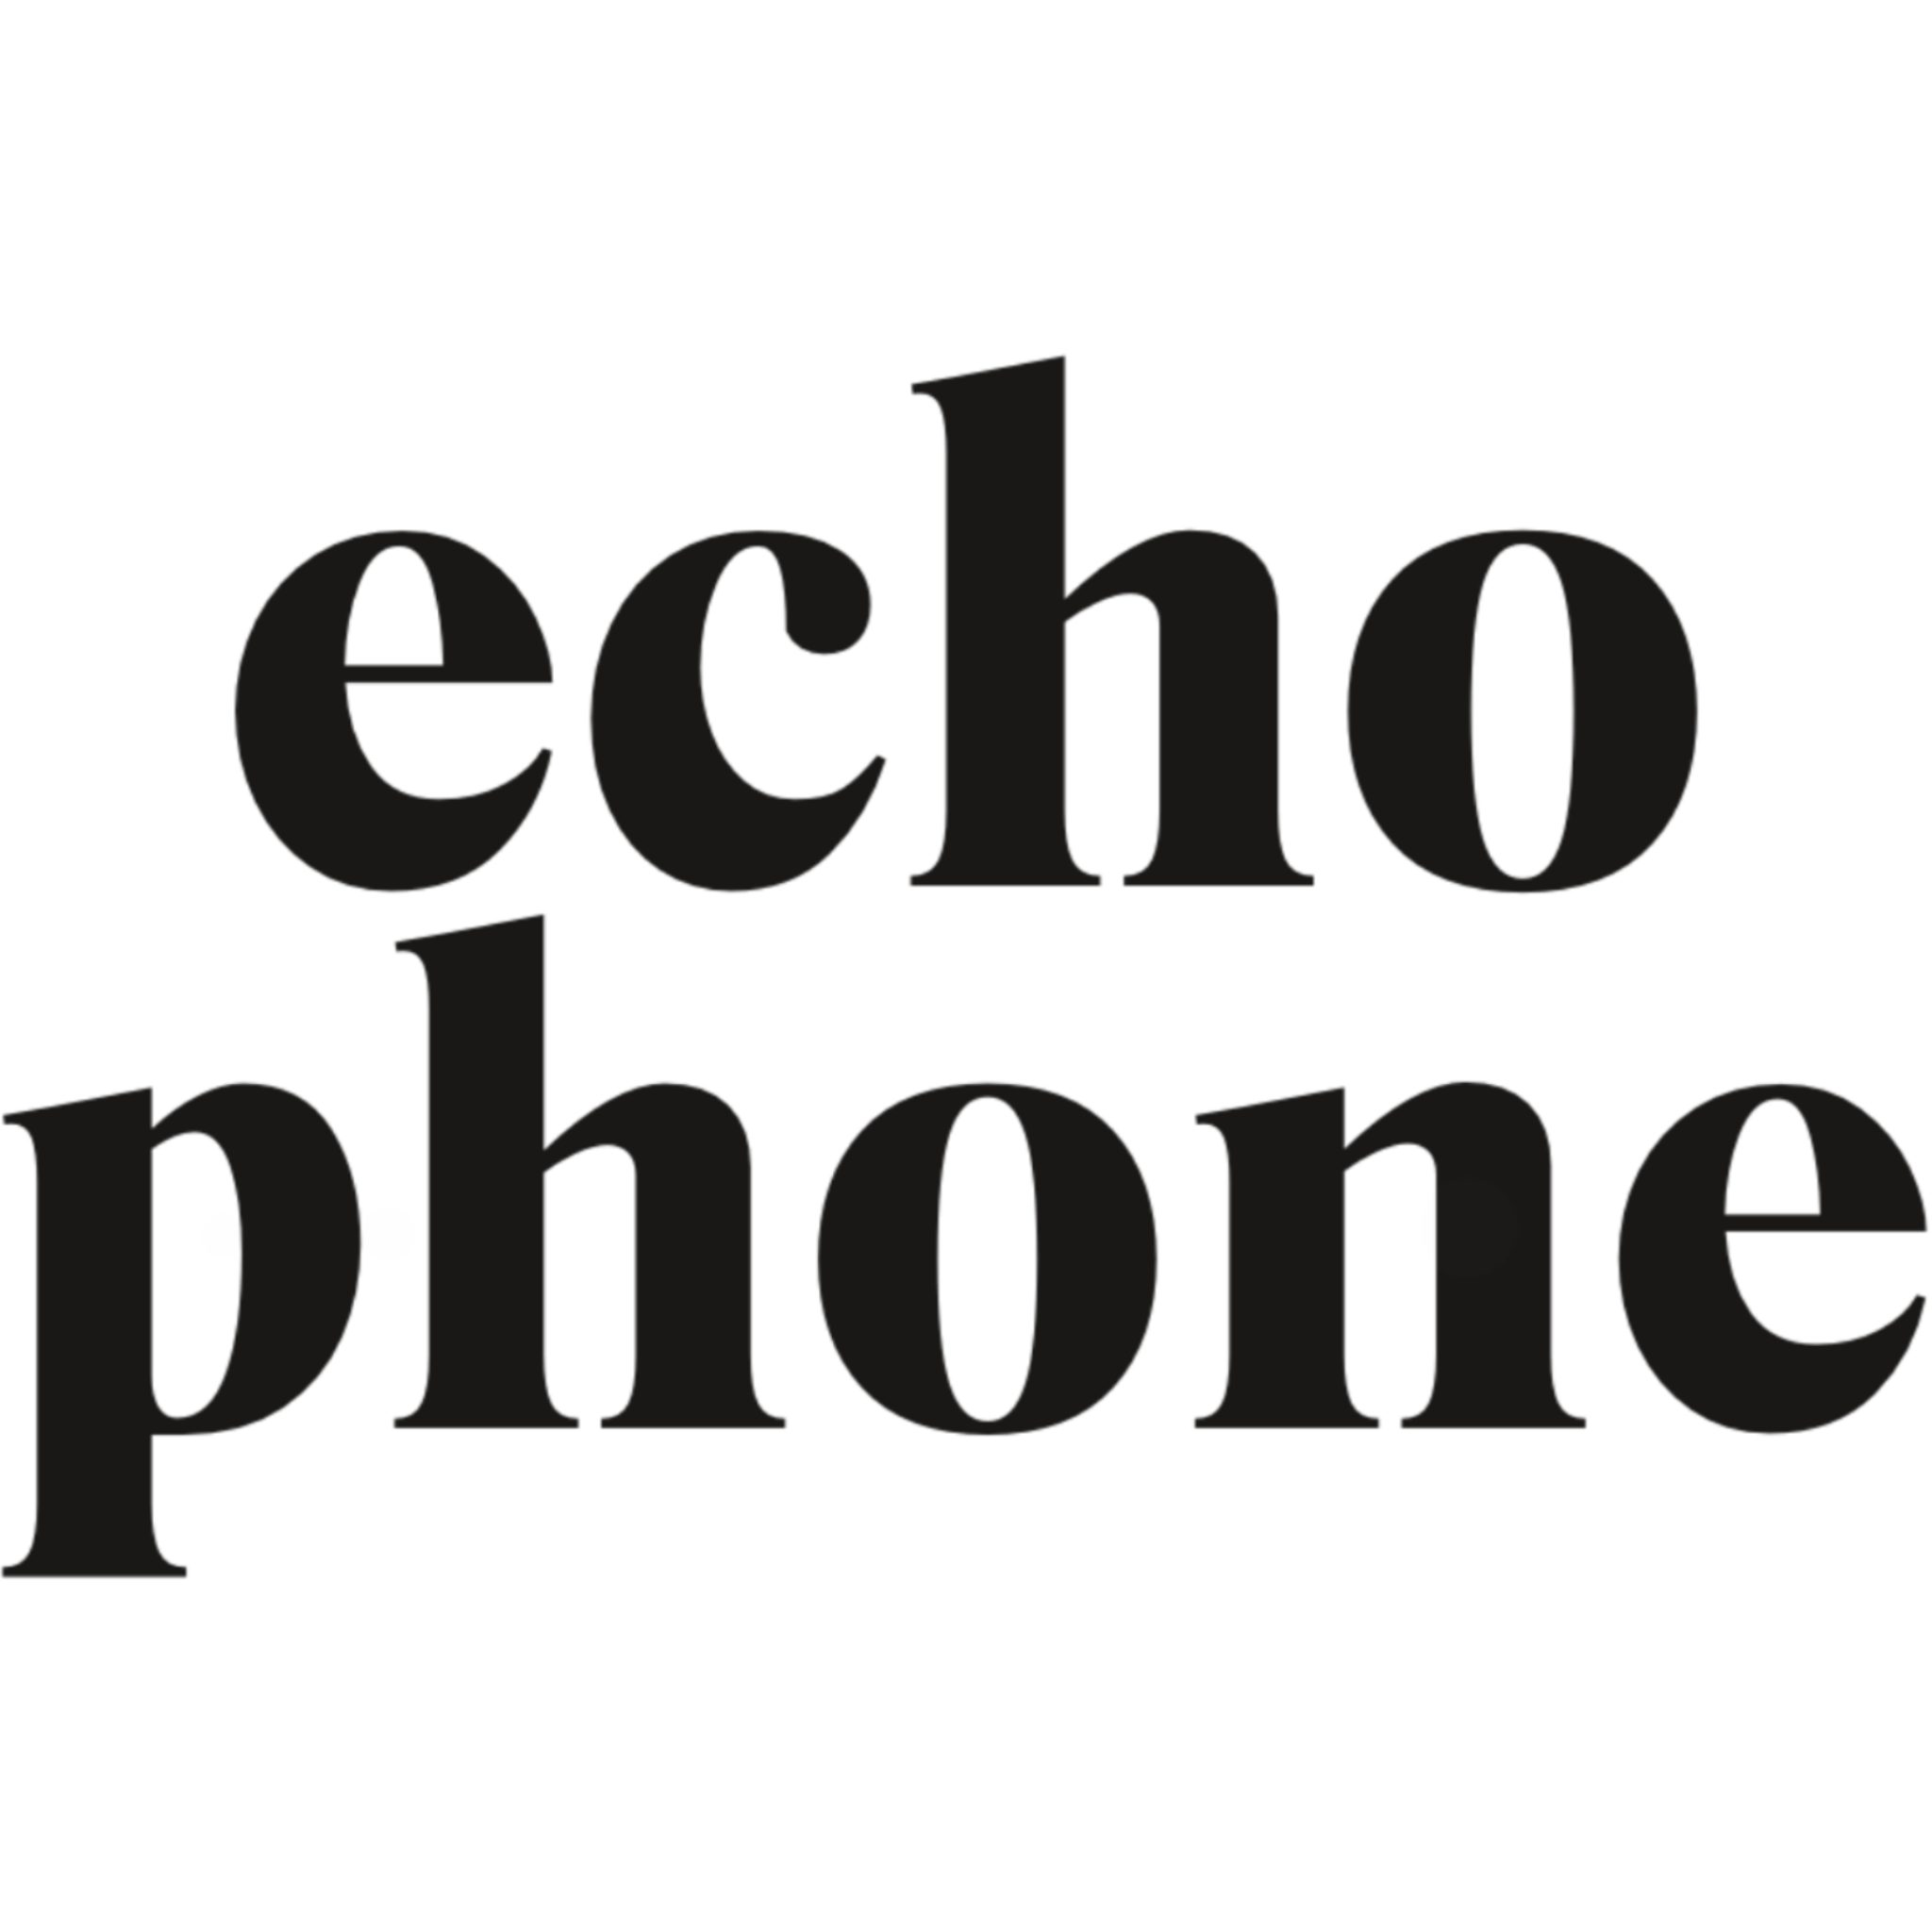 Echo phone